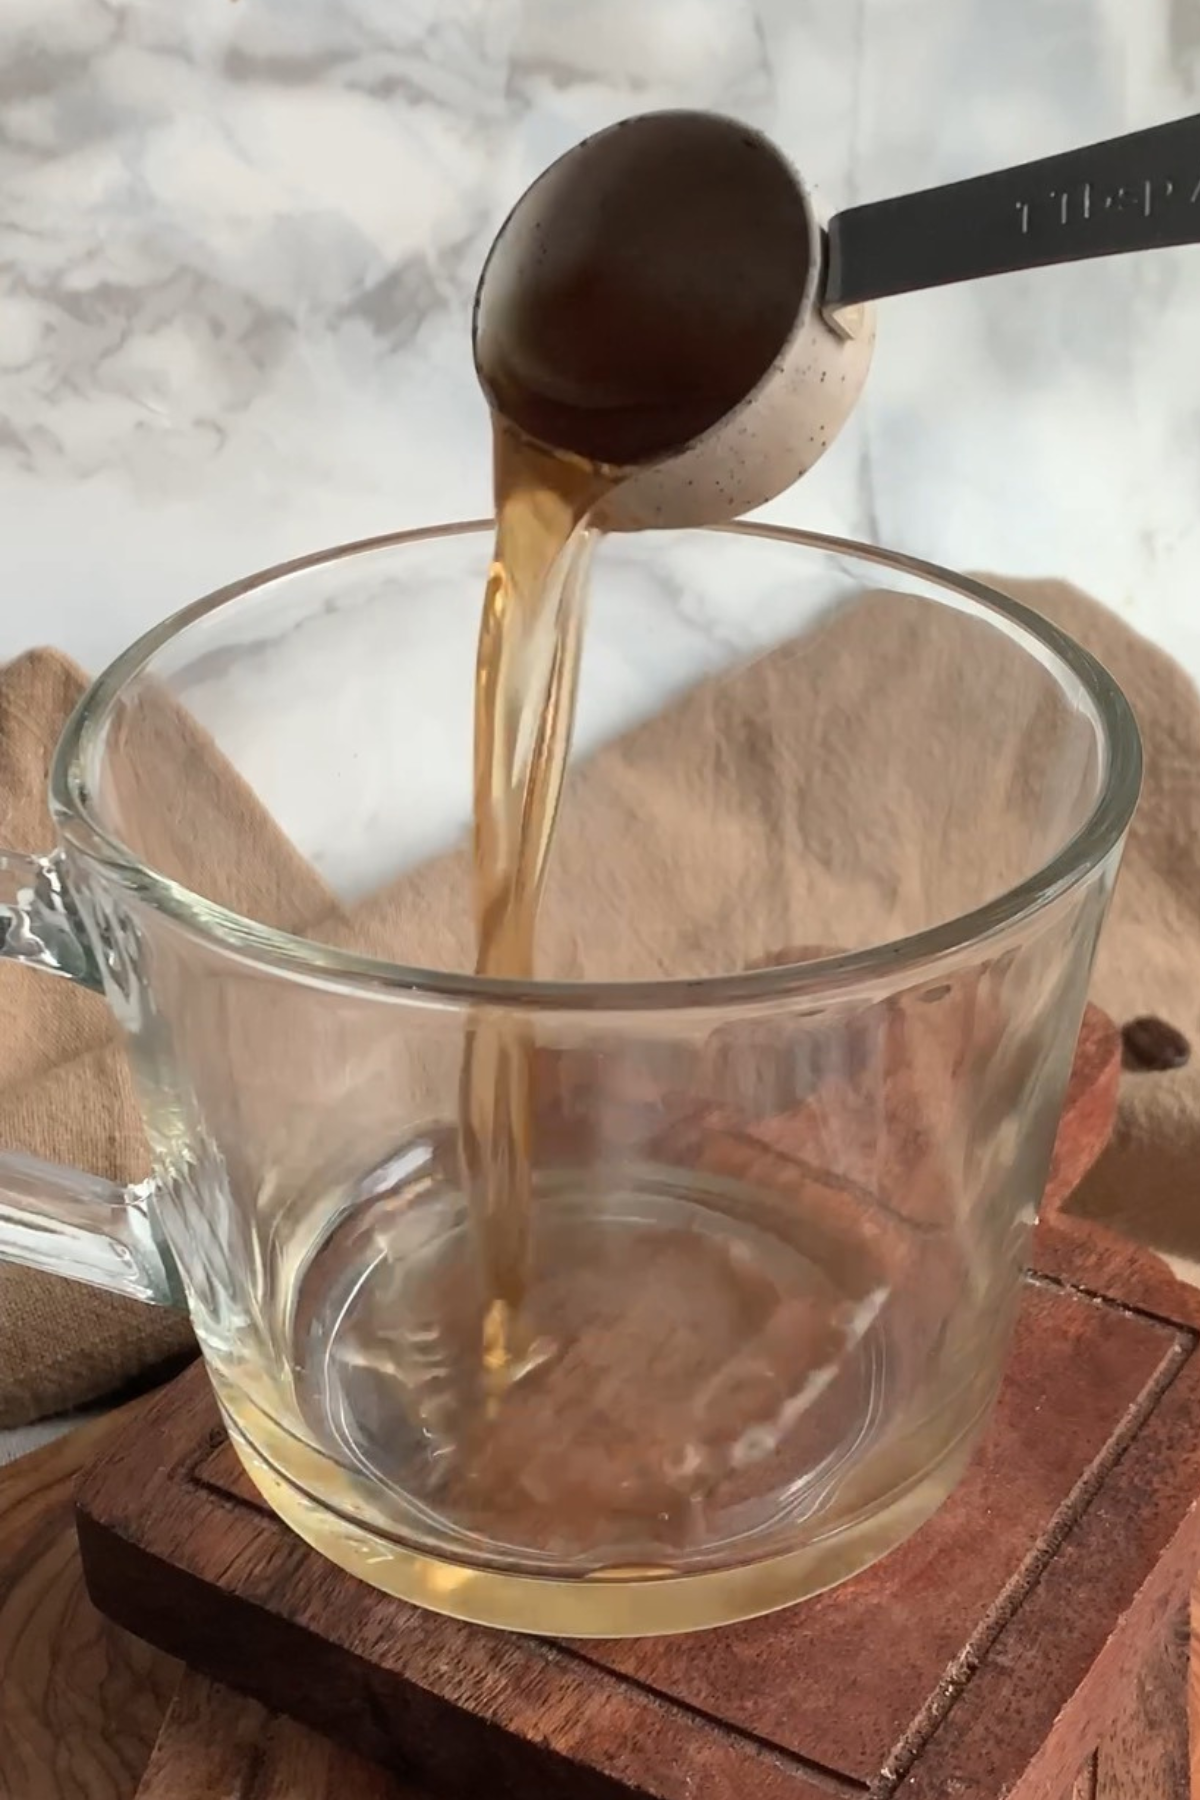 Adding vanilla syrup to a mug.